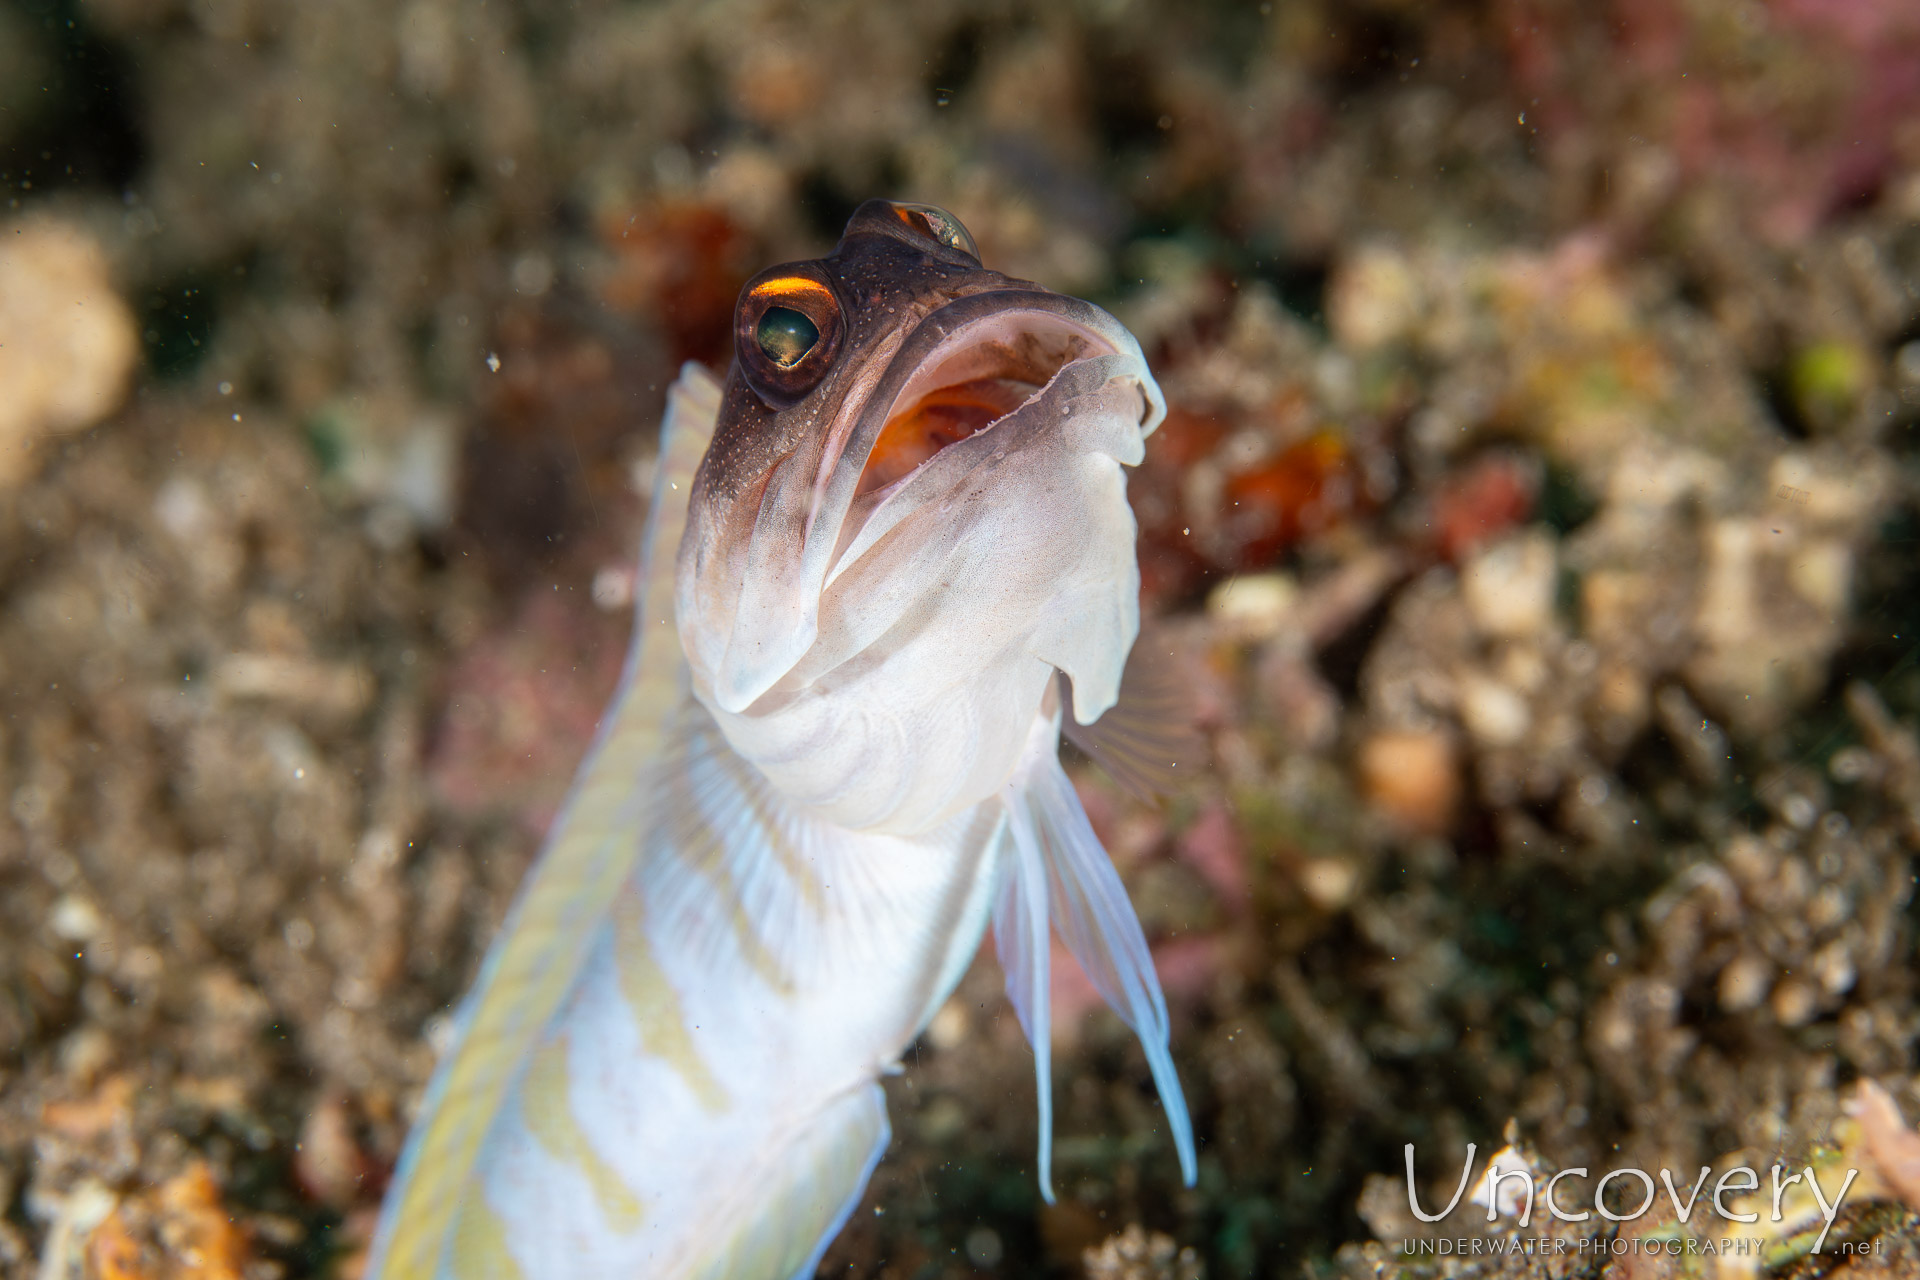 Goldspecs Jawfish (opistognathus Randalli), photo taken in Philippines, Negros Oriental, Dauin, Atmosphere House Reef